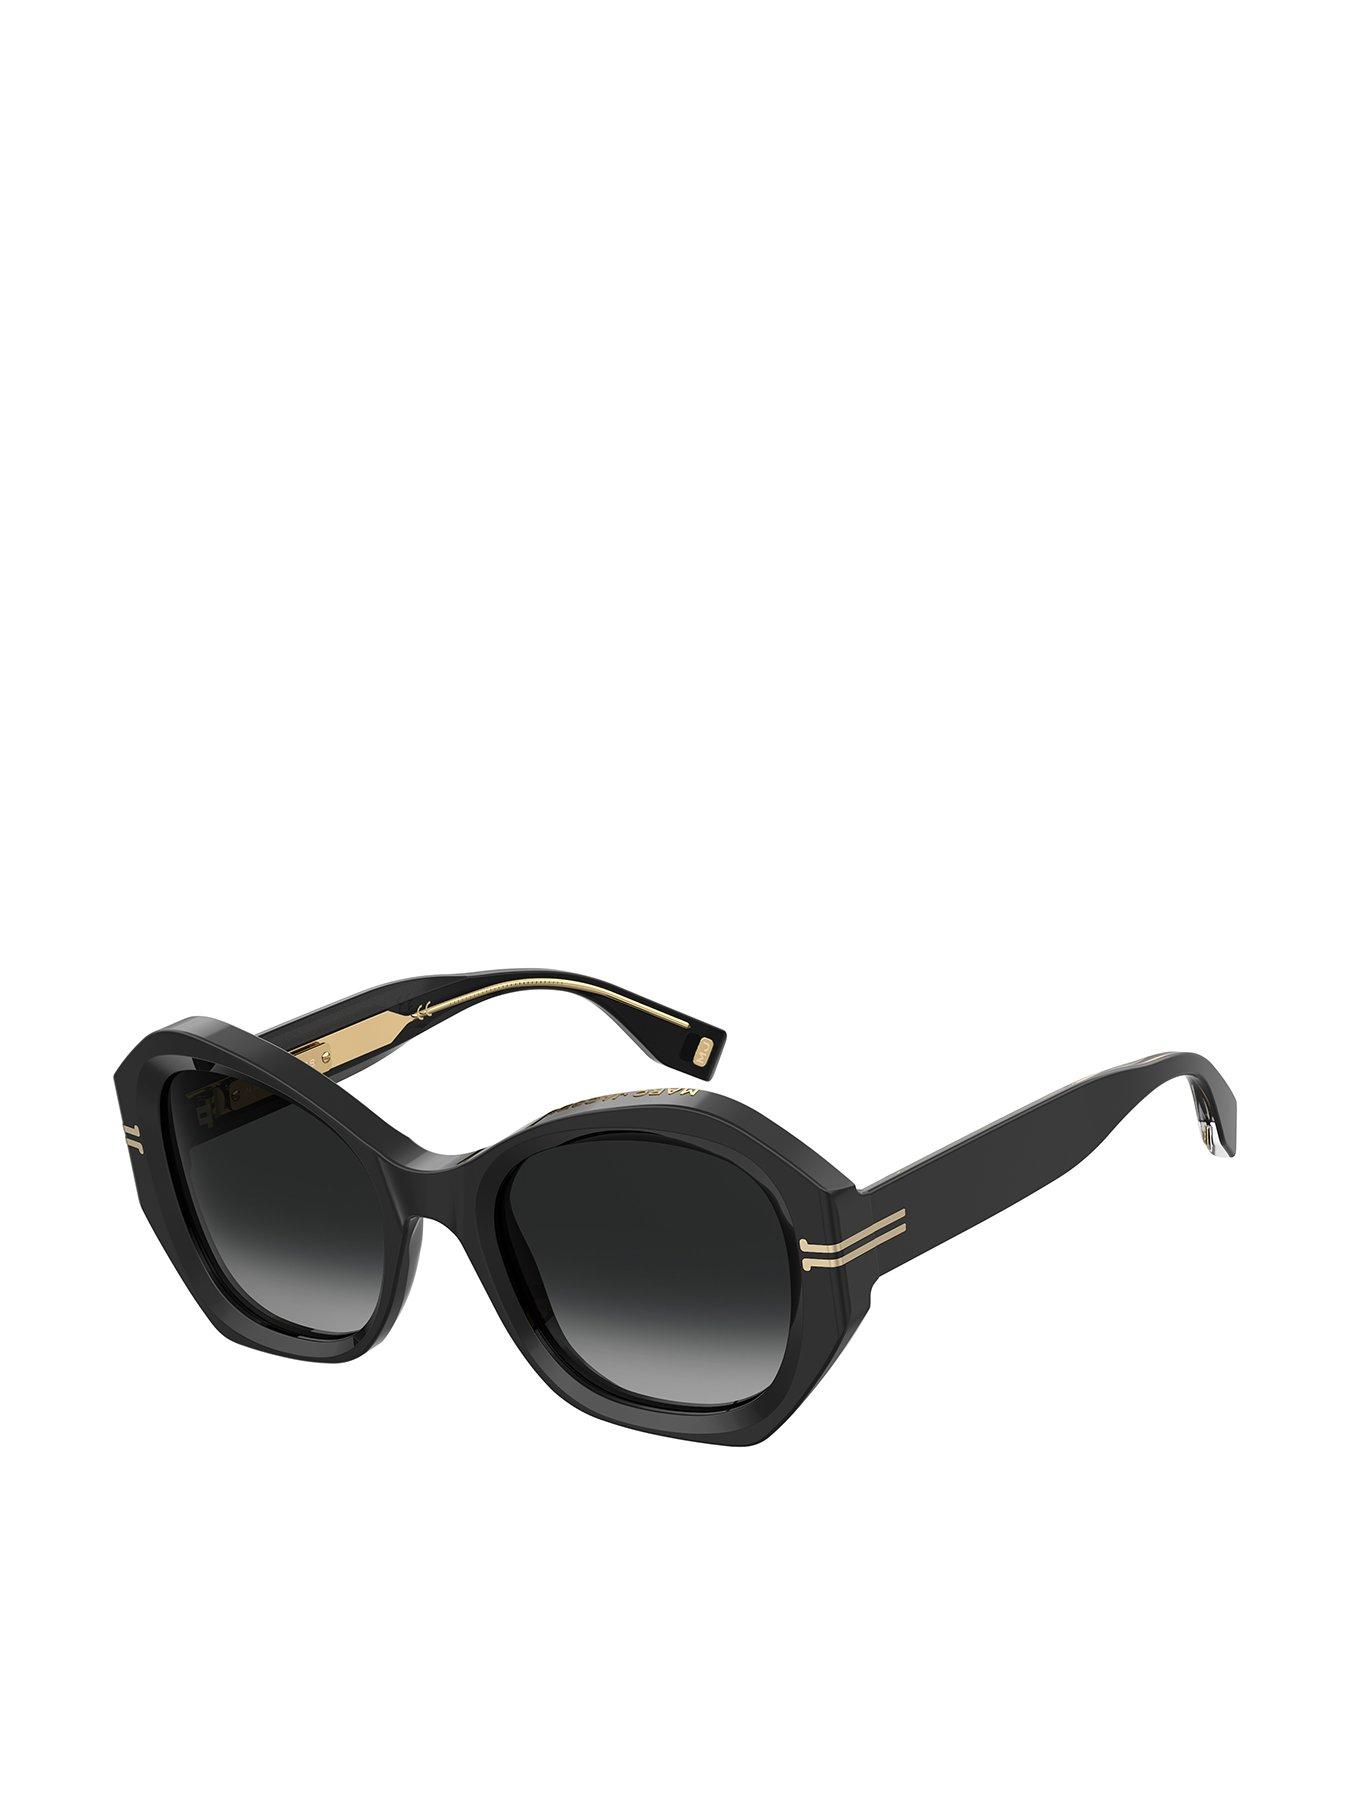 Women Oversized Sunglasses - Black